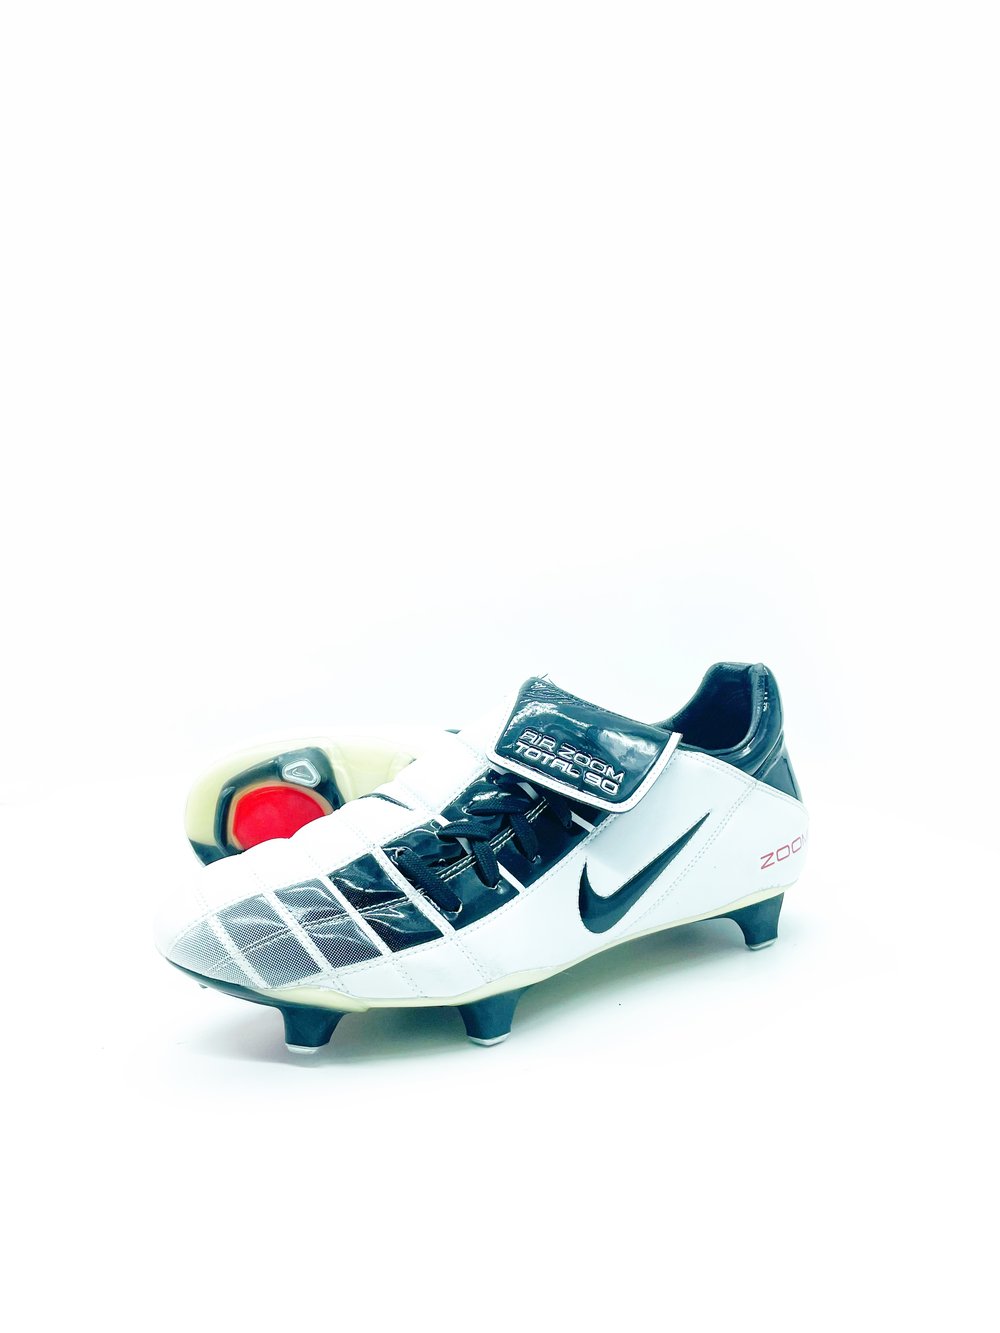 porcelana Arco iris Sin alterar Tbtclassicfootballboots — Nike Air zoom total 90 II SG